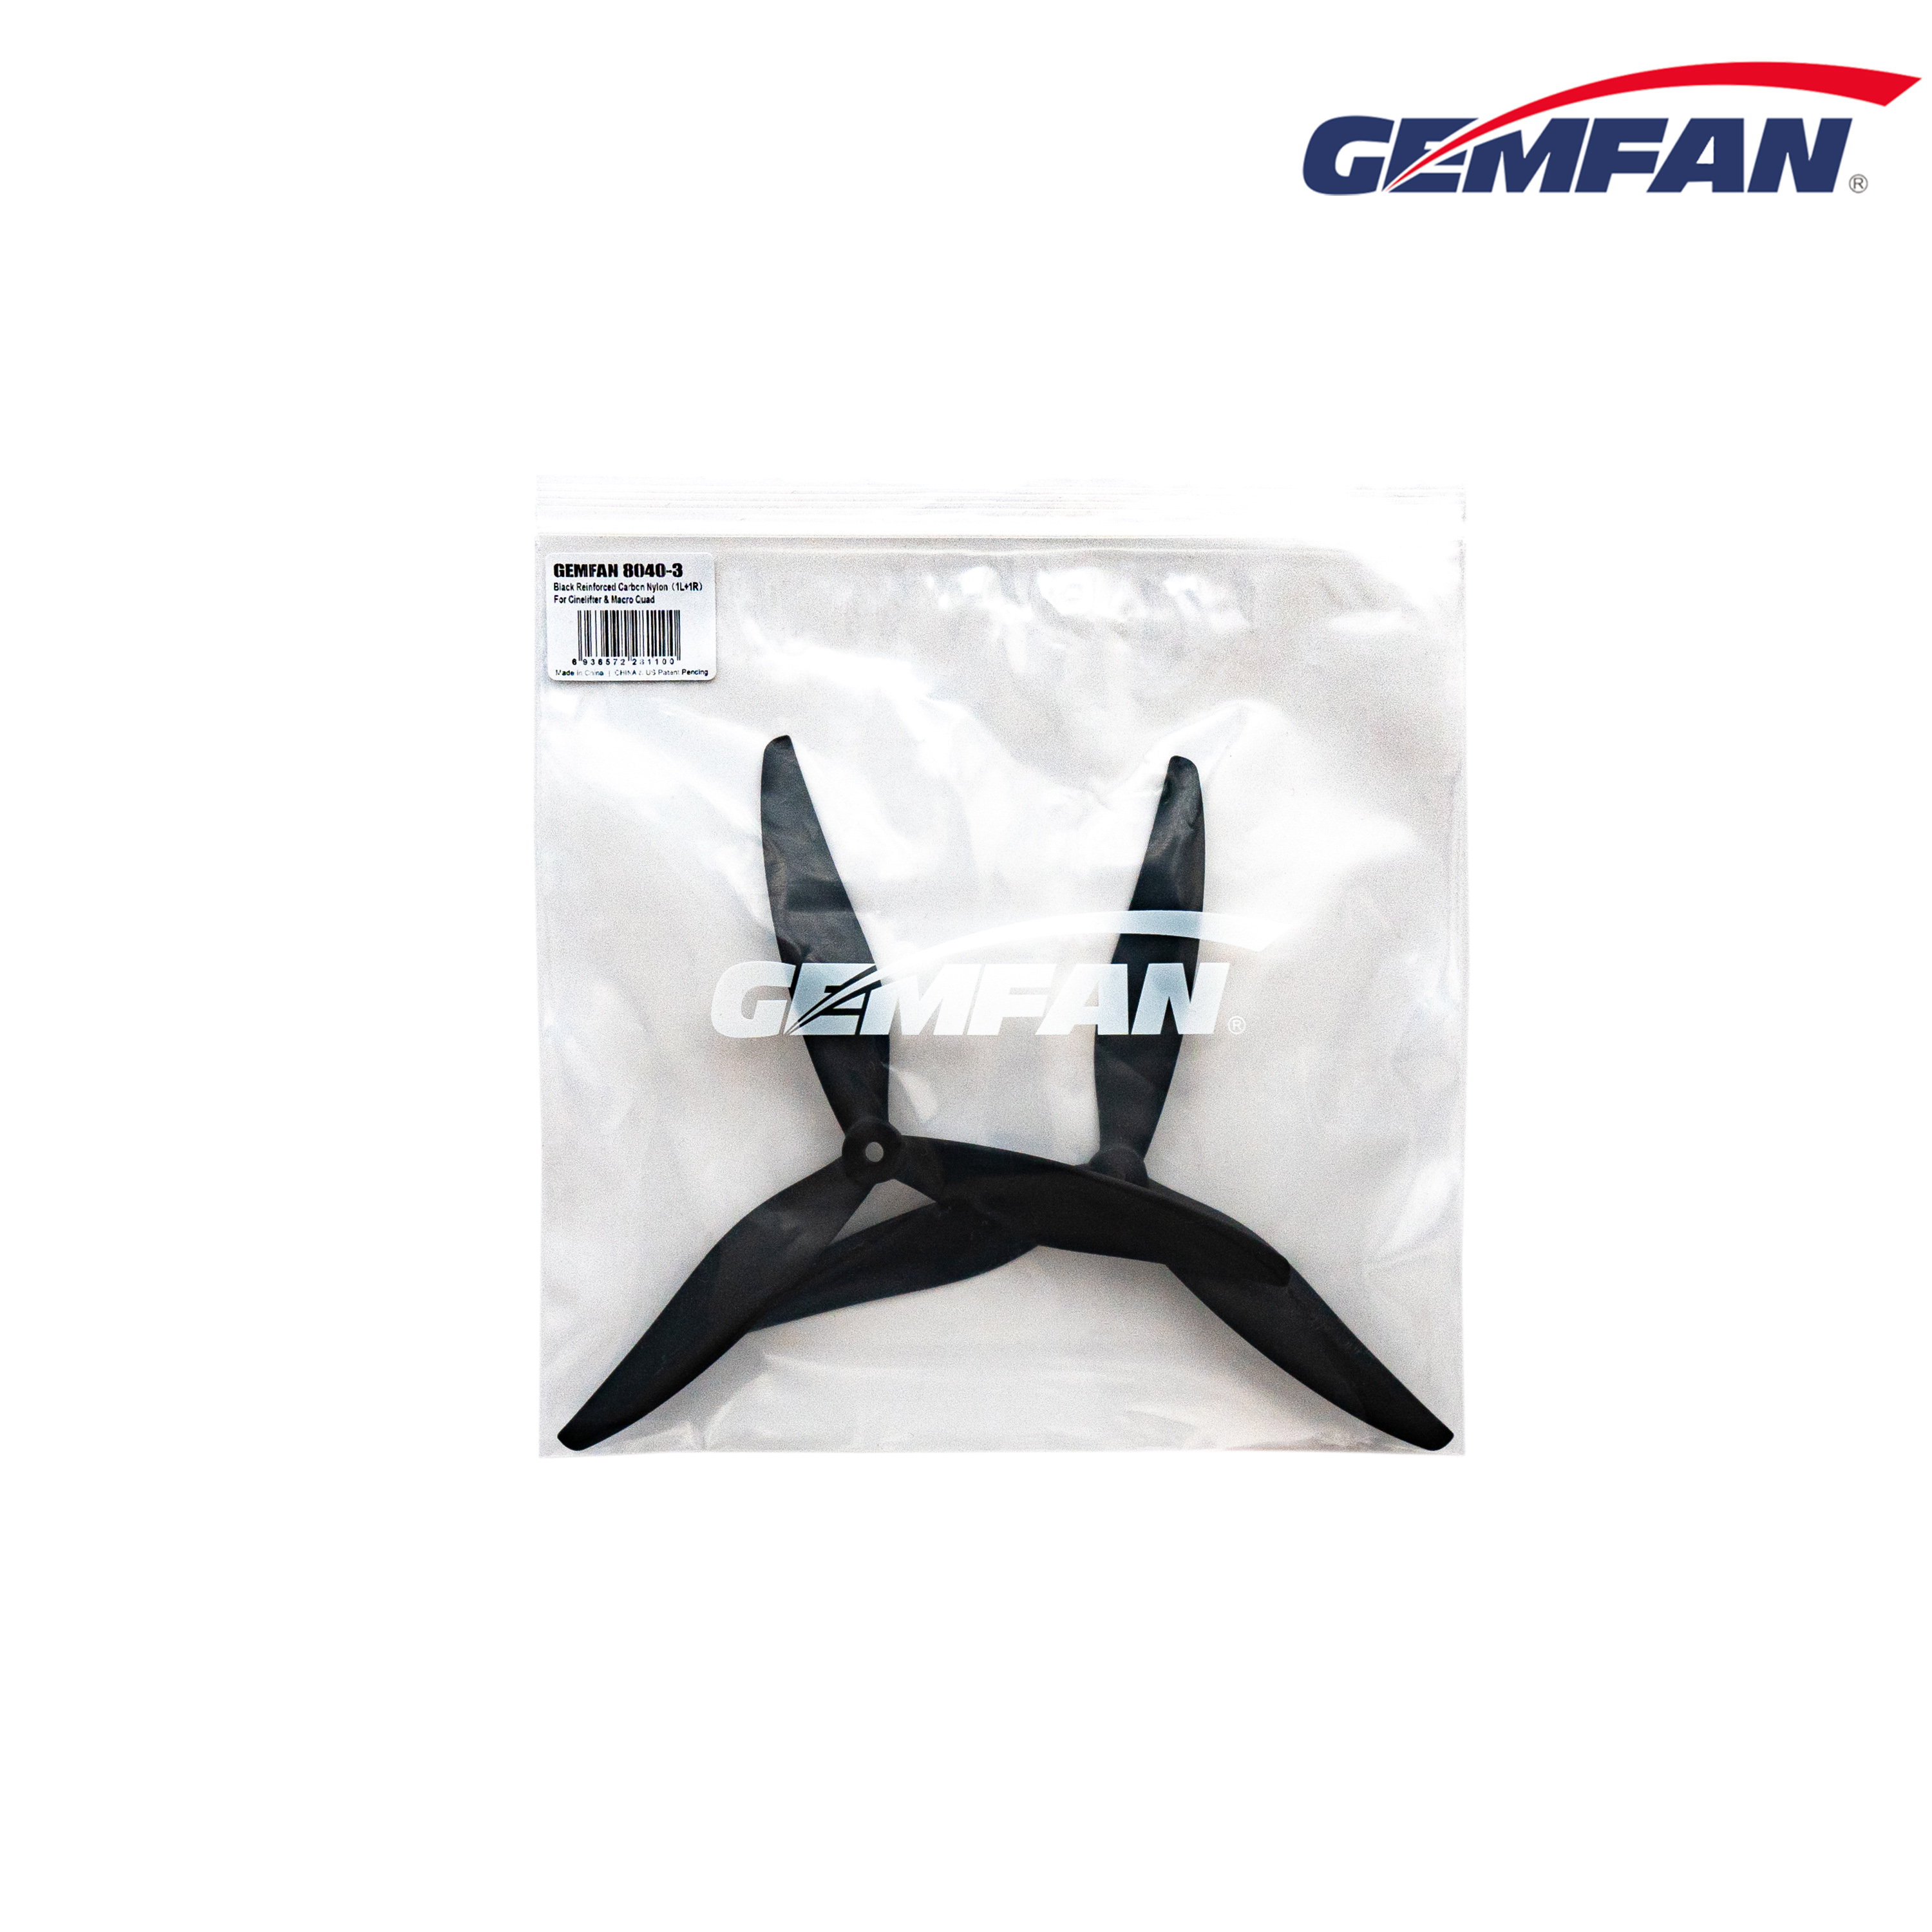 Gemfan 8040-3 Carbon Nylon for Cinelifter & Macro Quad